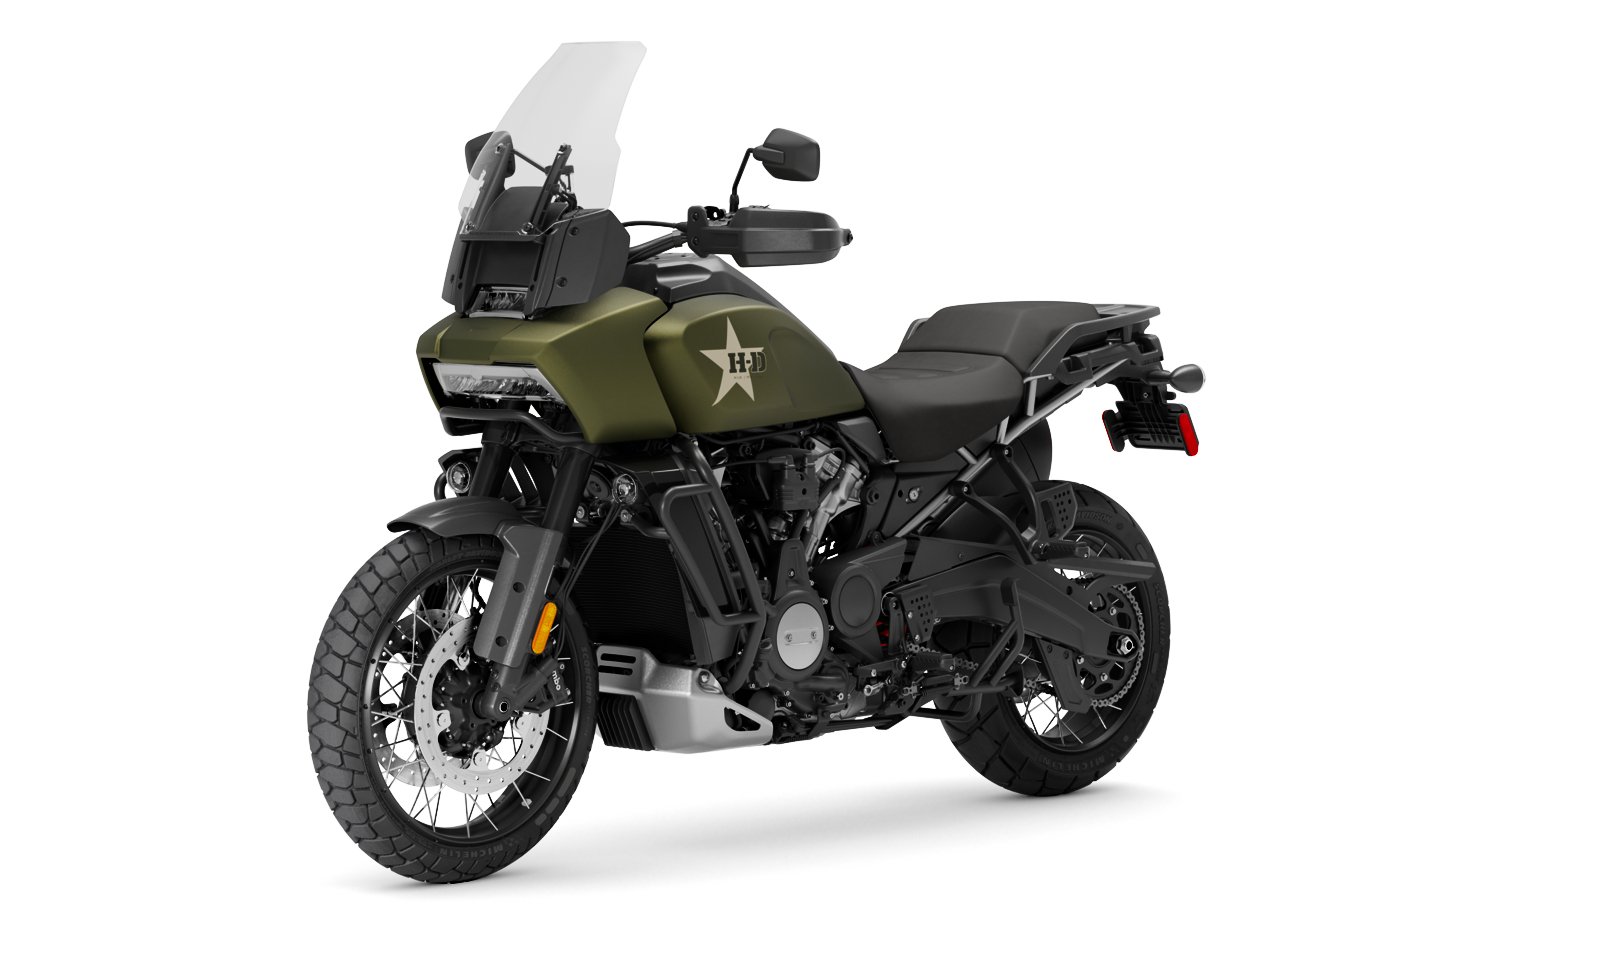 2022-pan-america-1250-special-gi-f73lb-motorcycle-07.jpg